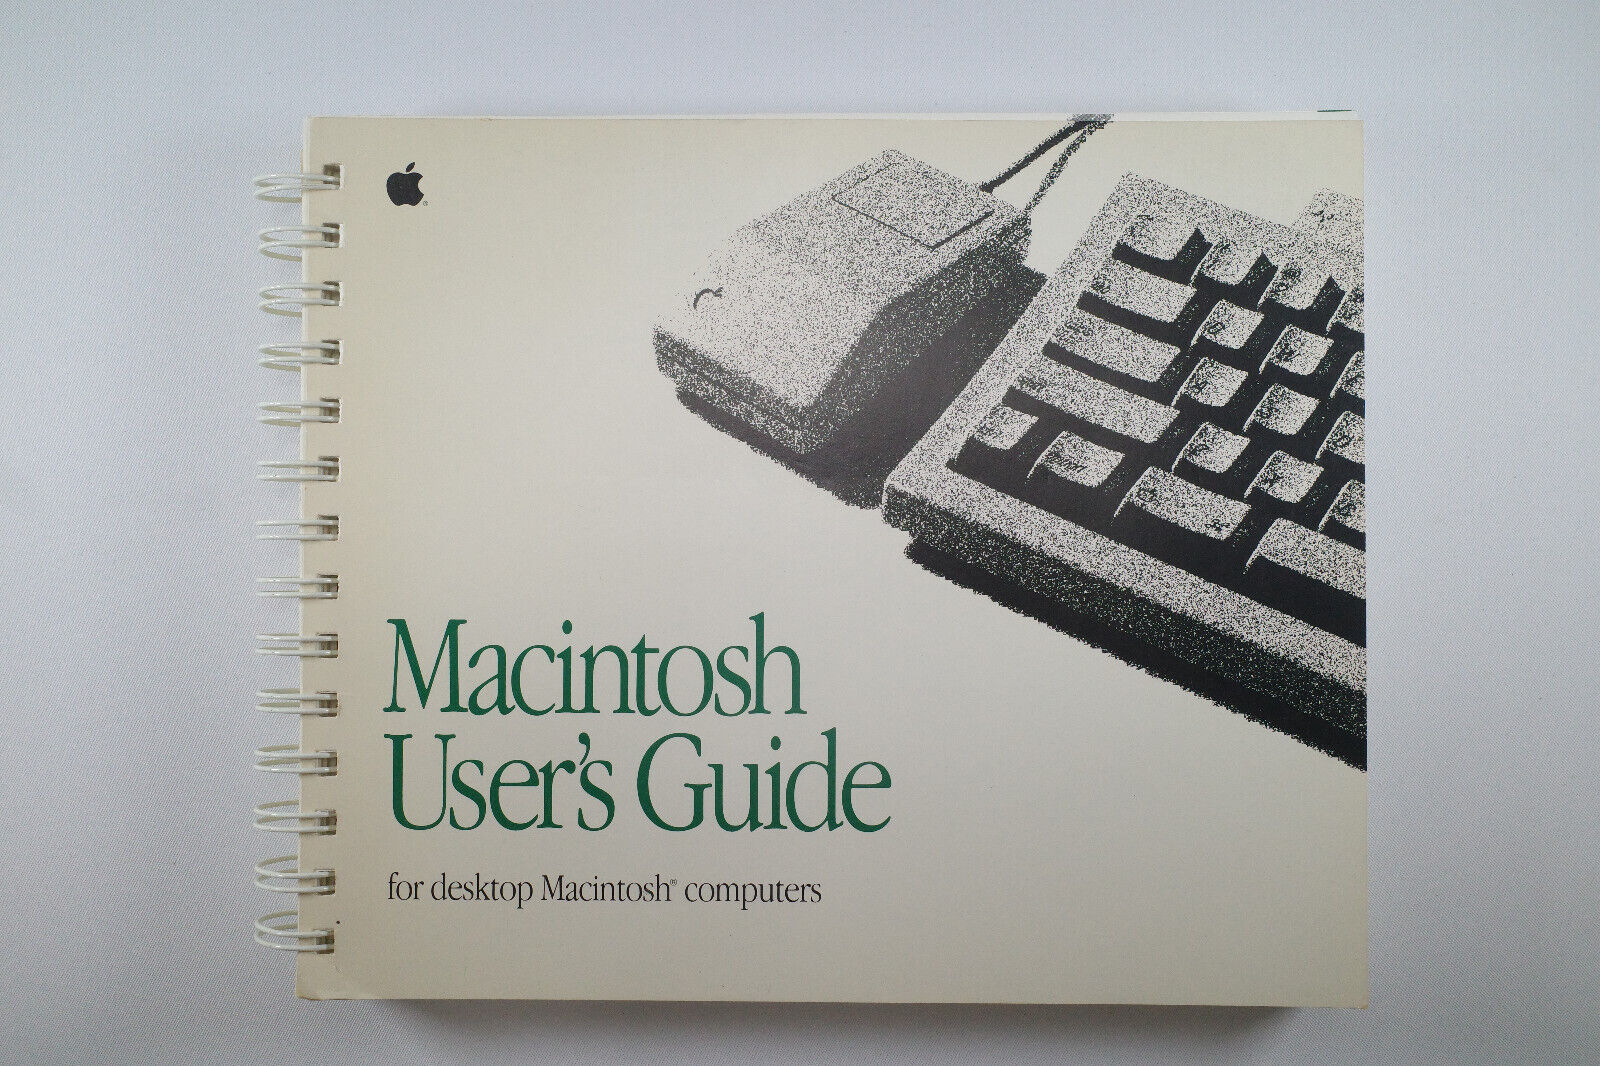 [Vintage] Macintosh User's Guide for desktop Macintosh computers